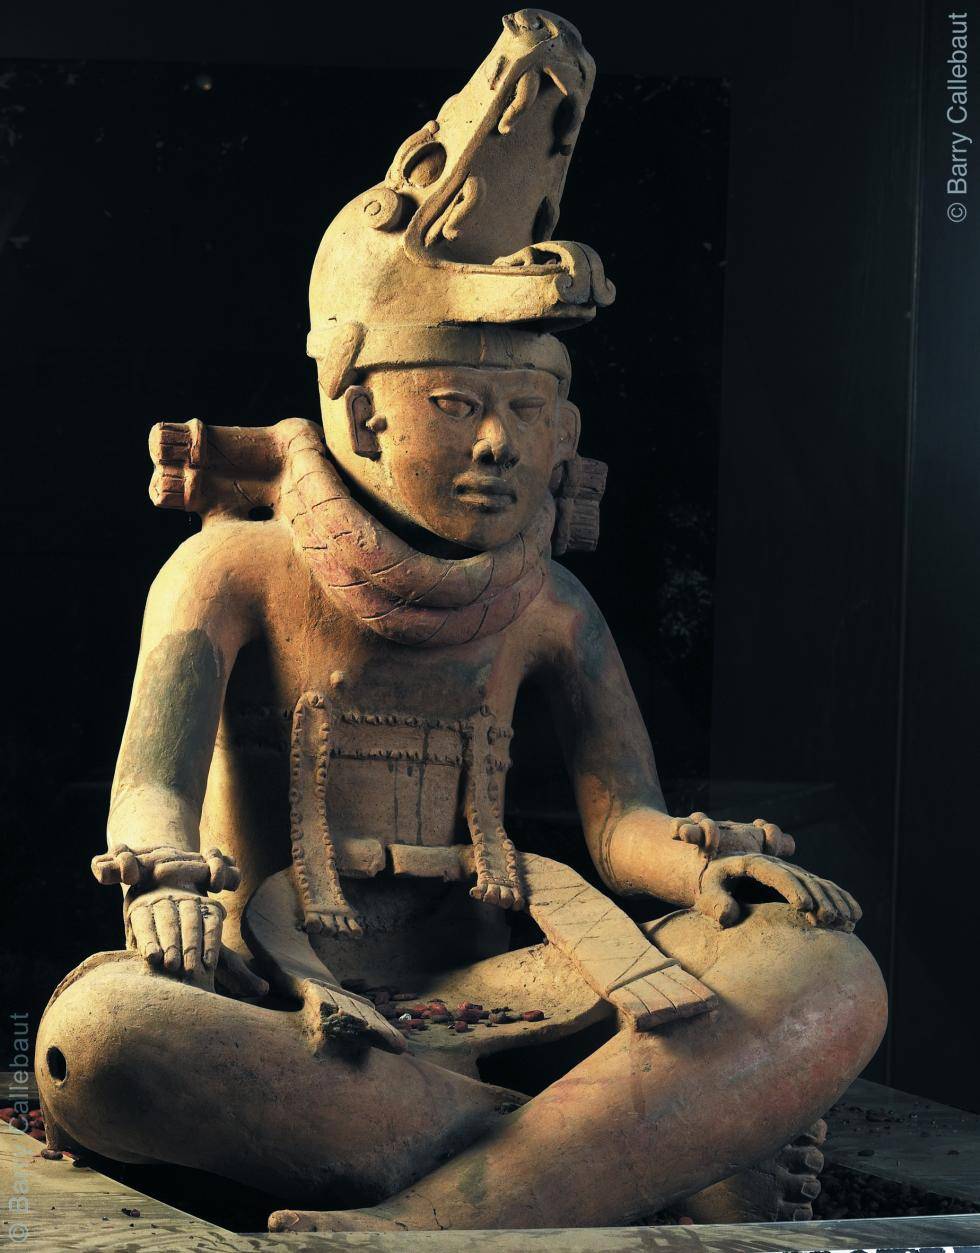 Aztec sculpture